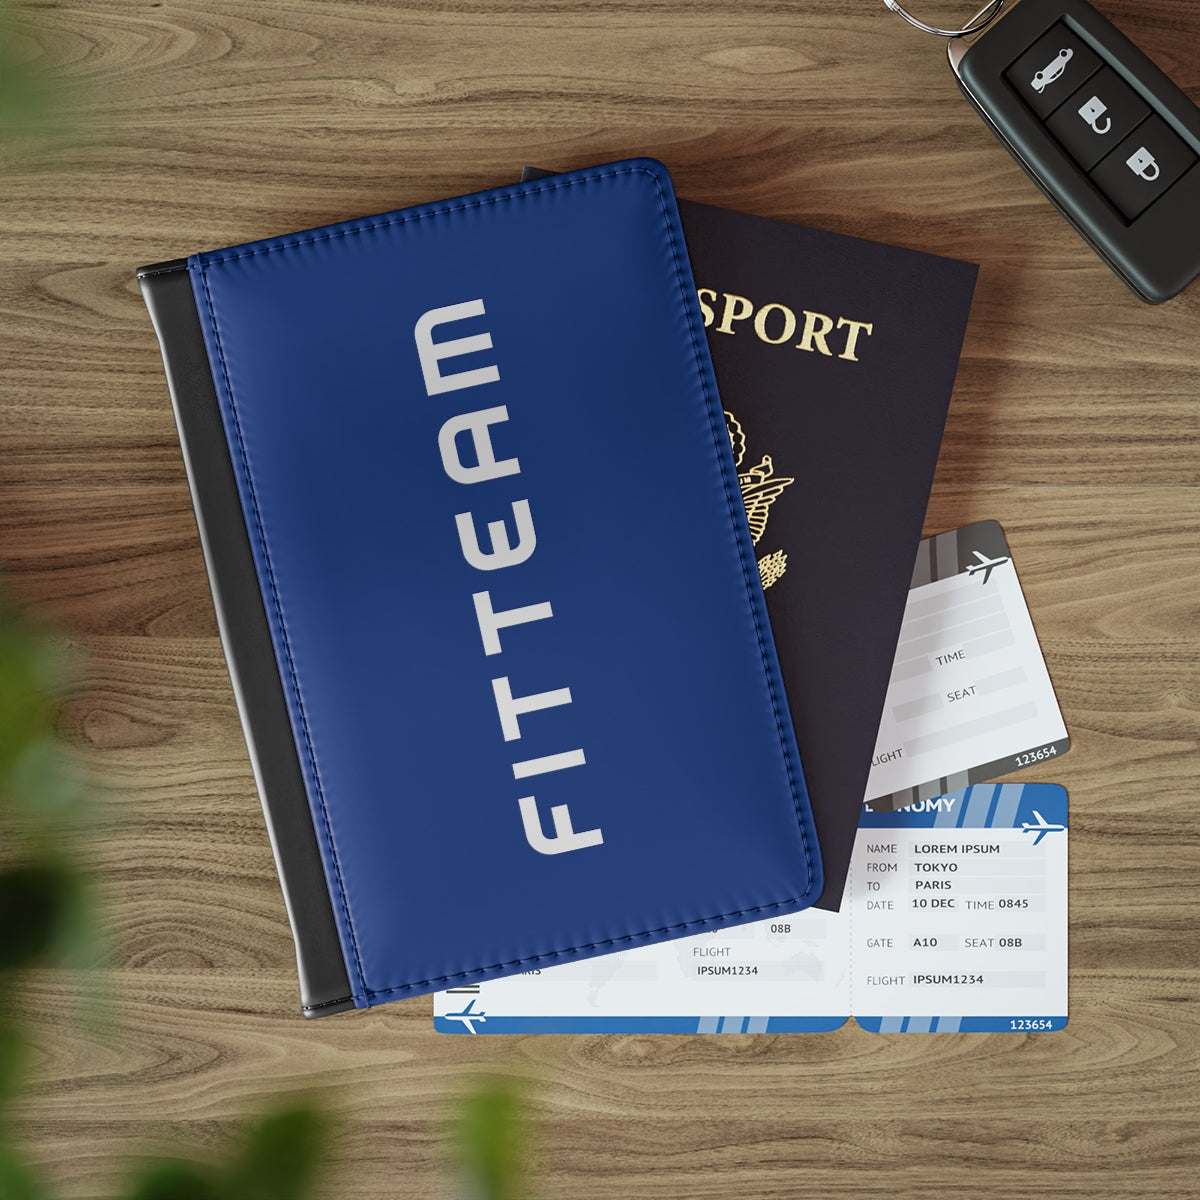 FITTEAM Passport Cover